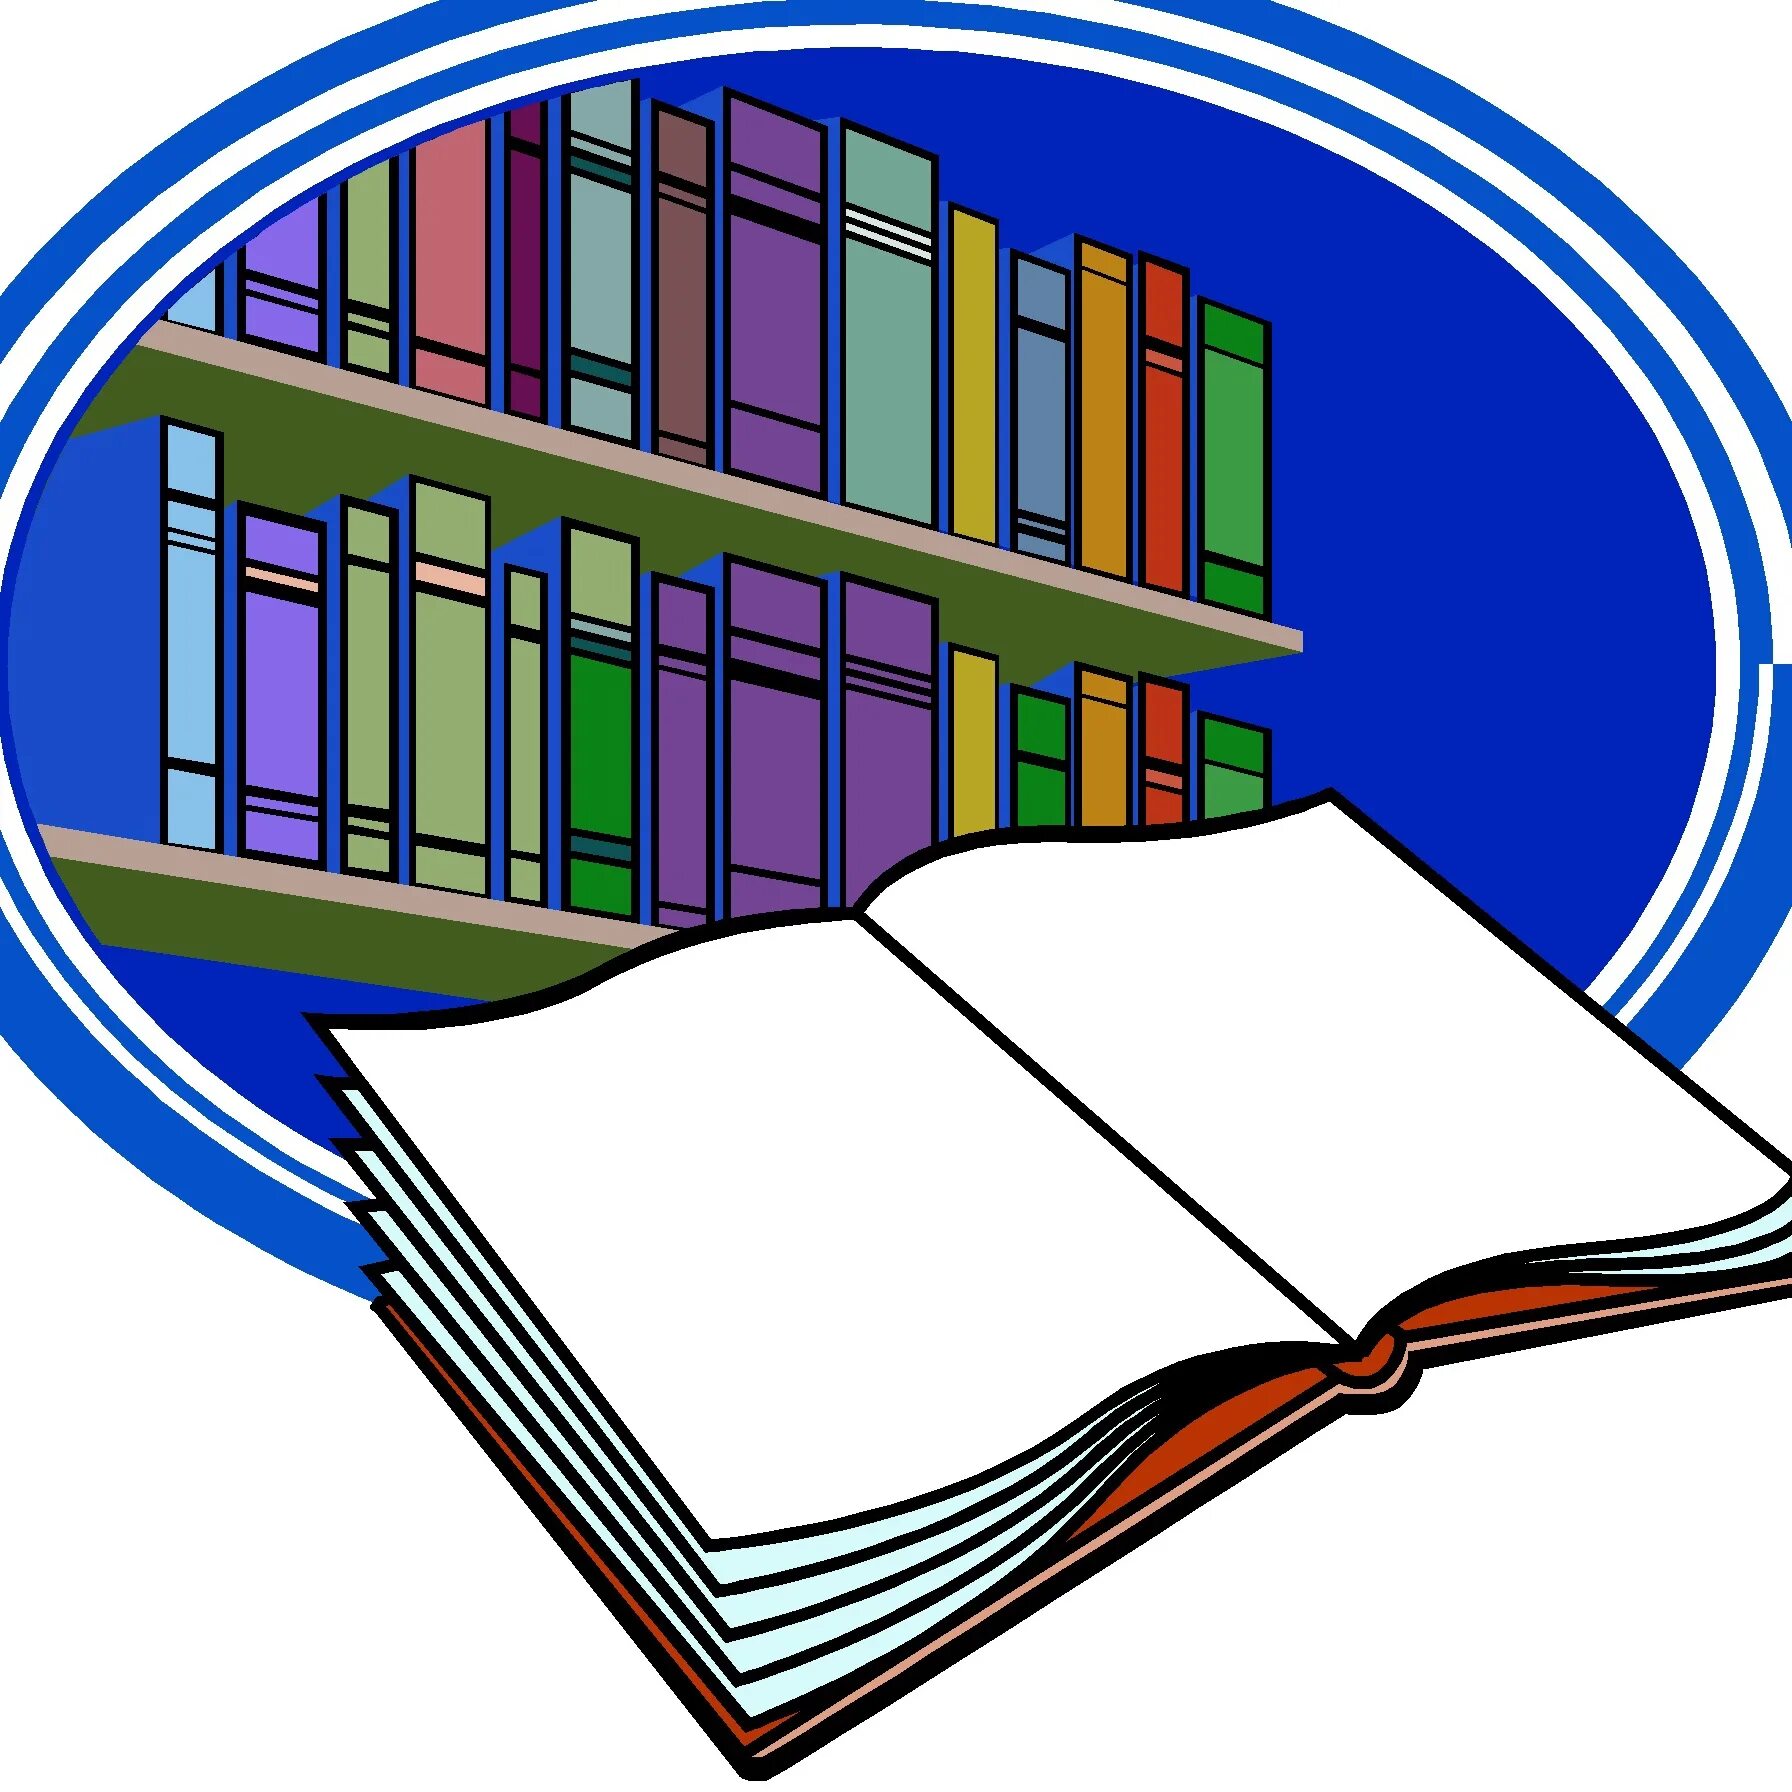 Проект год книги. Логотип библиотеки. Библиотека картинки. Библиотека иллюстрация. Логотип школьной библиотеки.